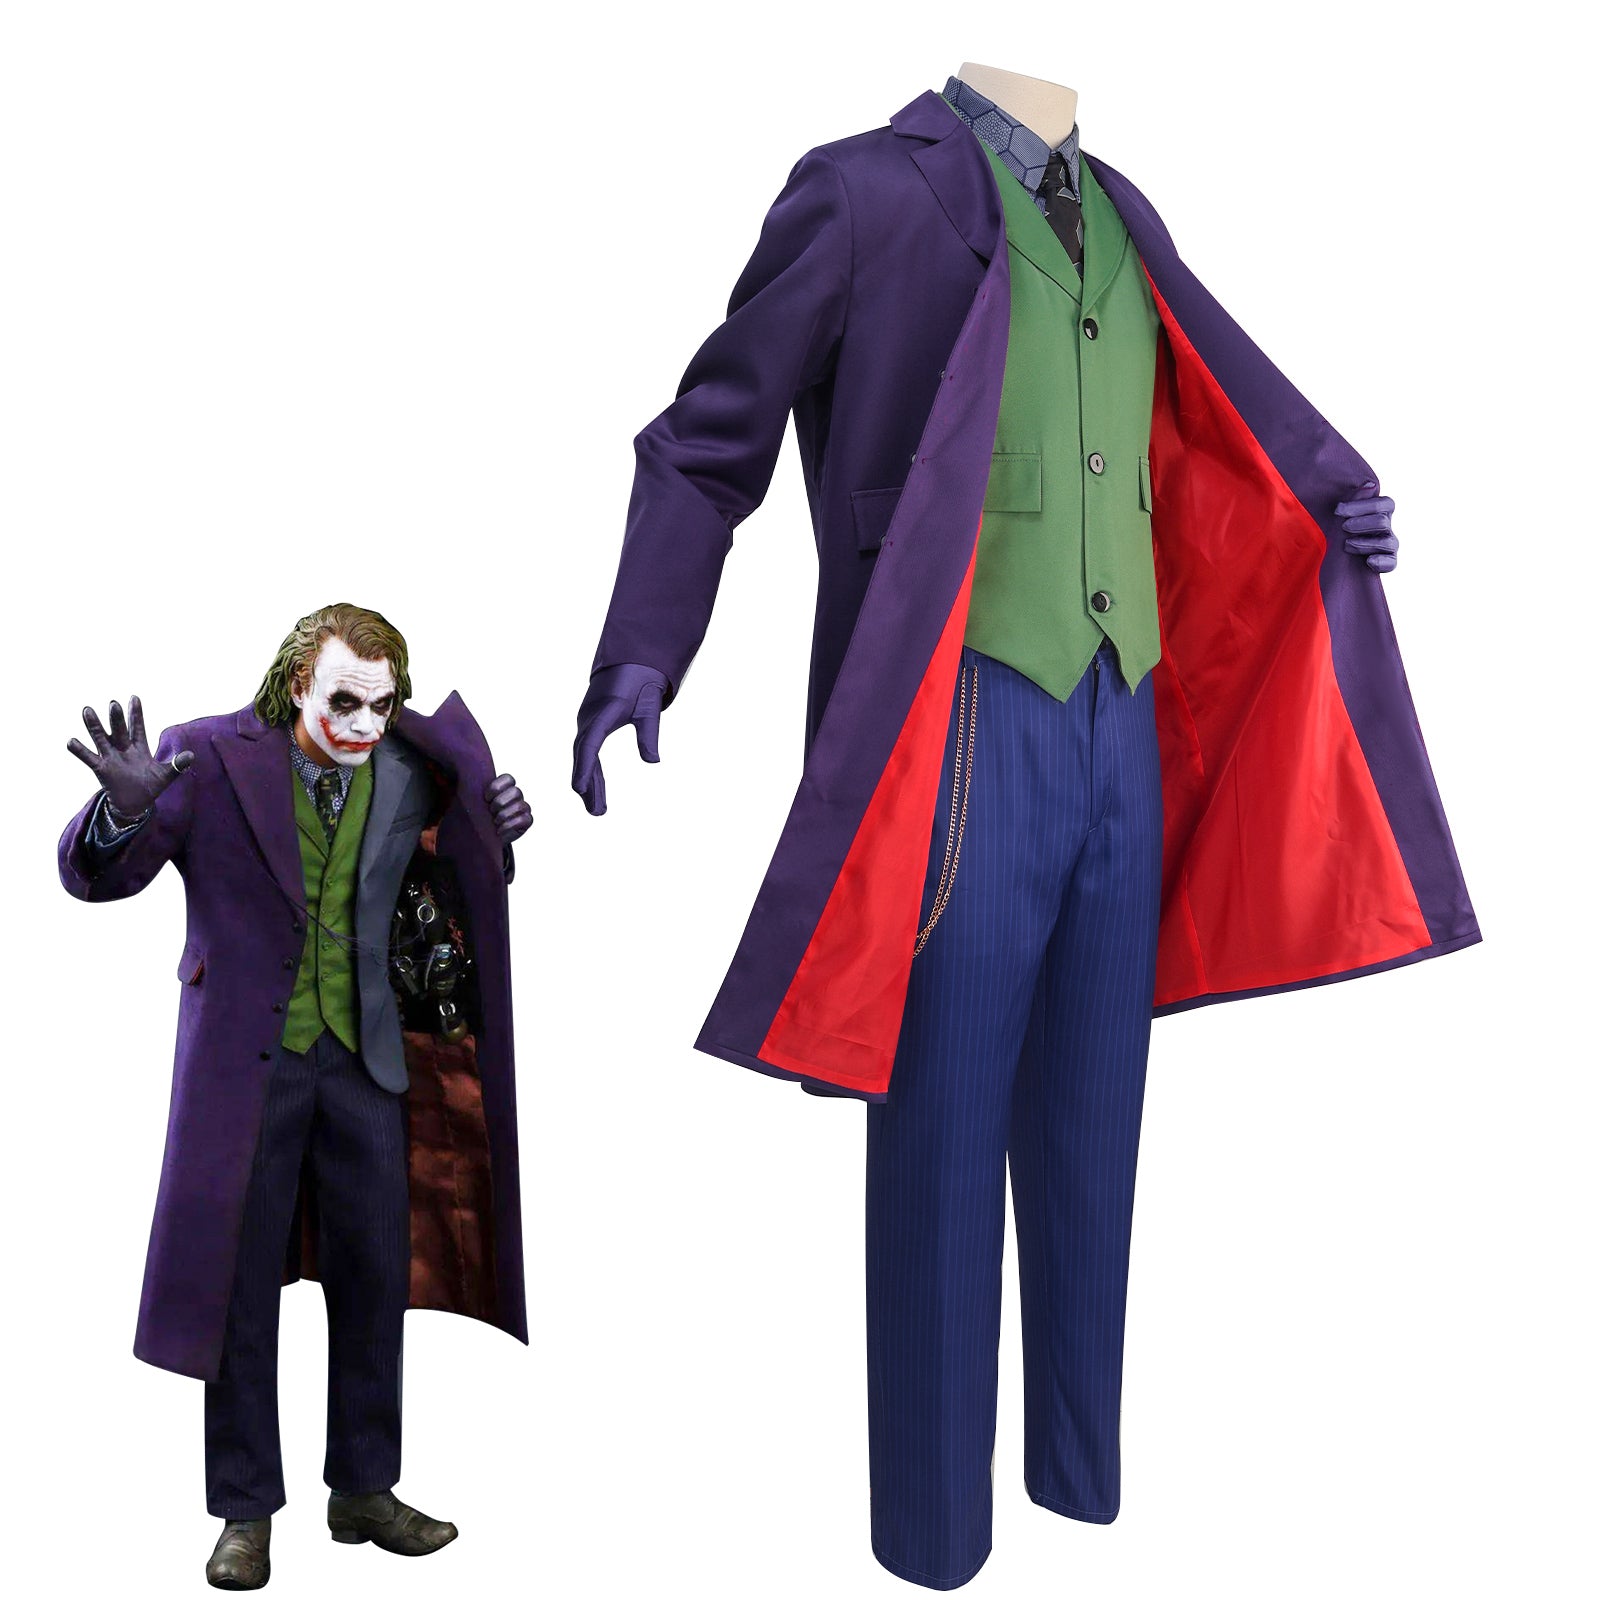 Joker Cosplay The Dark Knight Kostüm Outfits Halloween Karneval Anzug